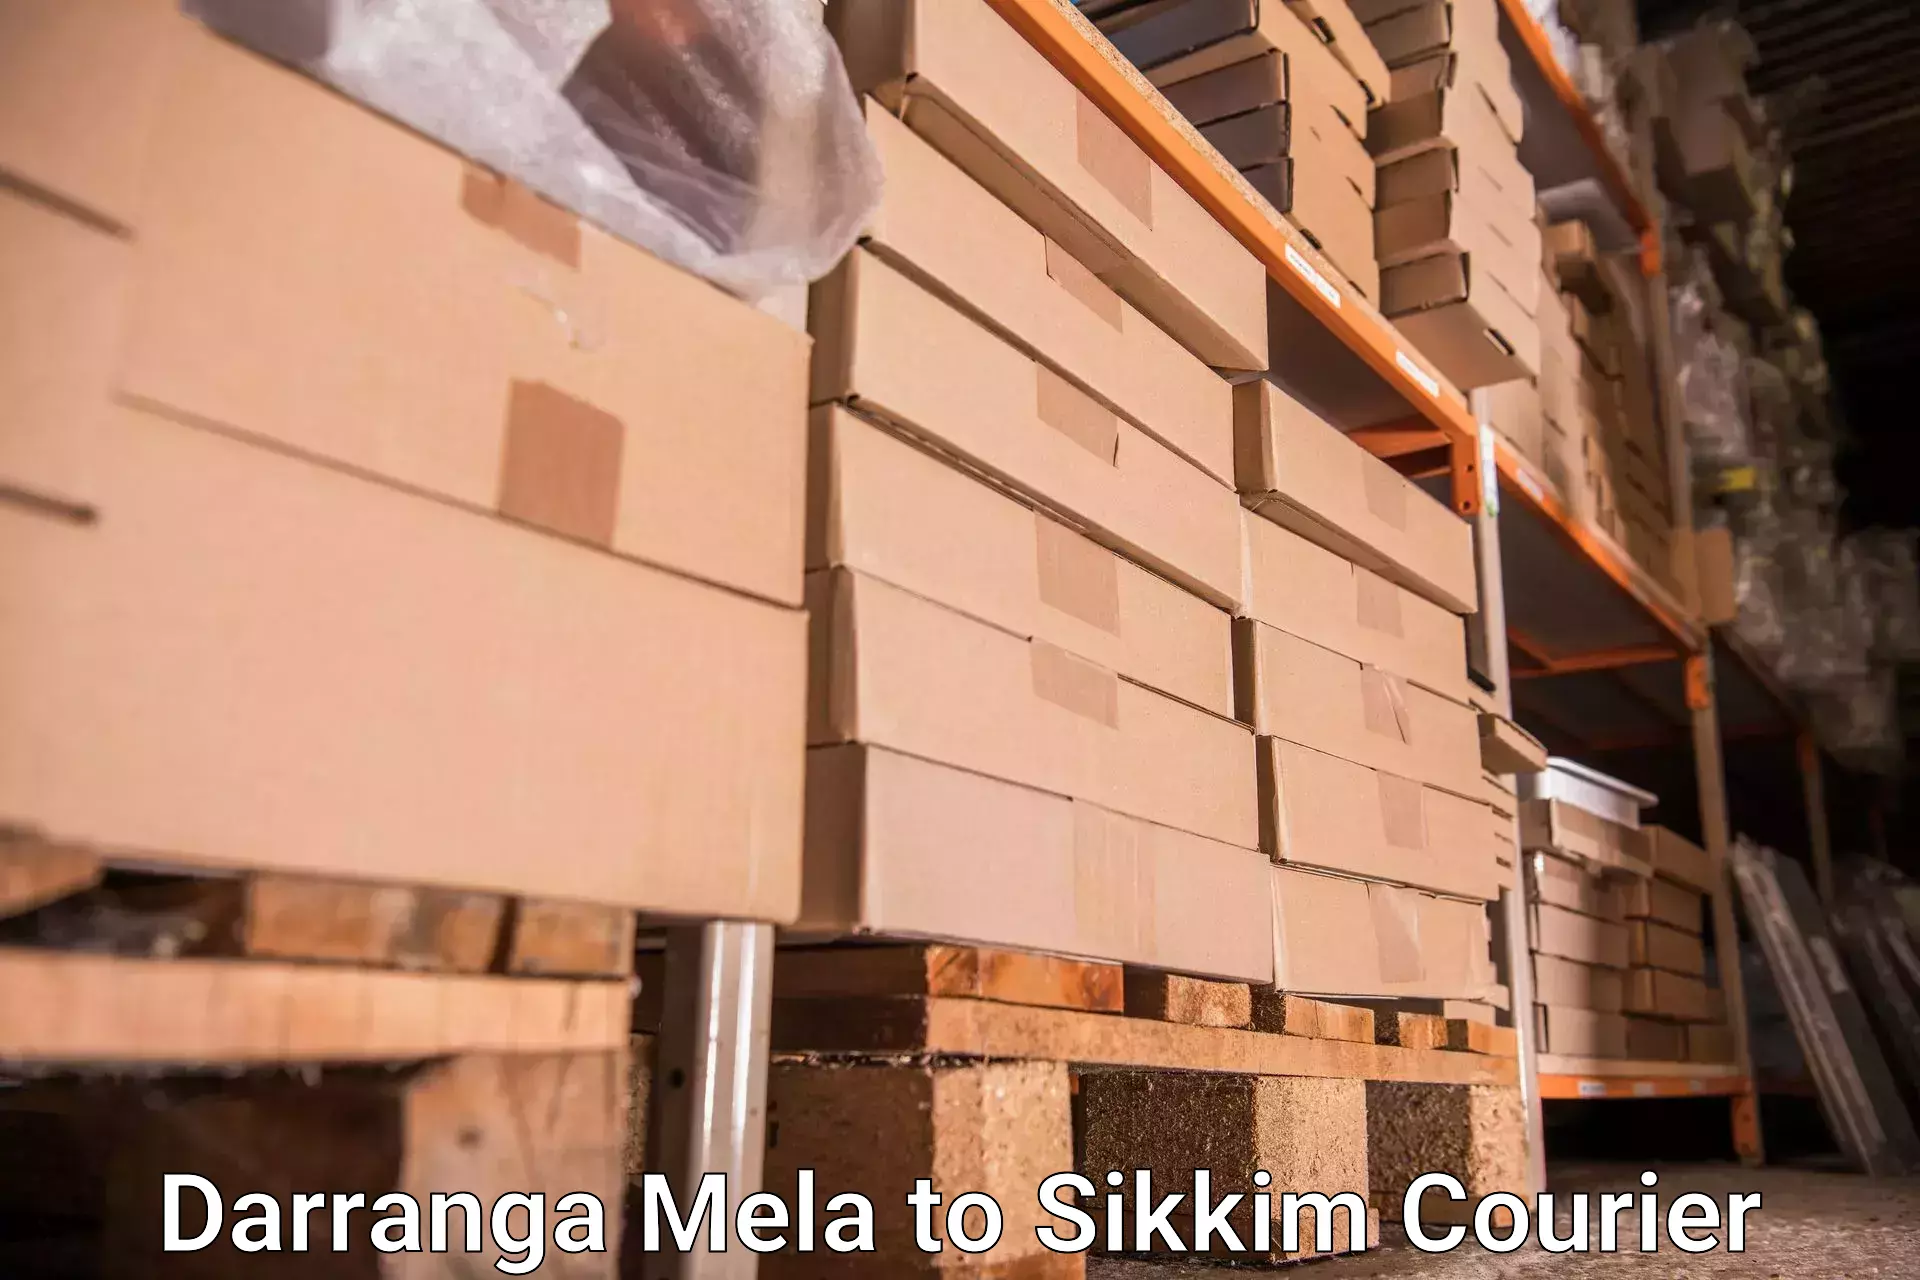 Baggage relocation service in Darranga Mela to Sikkim